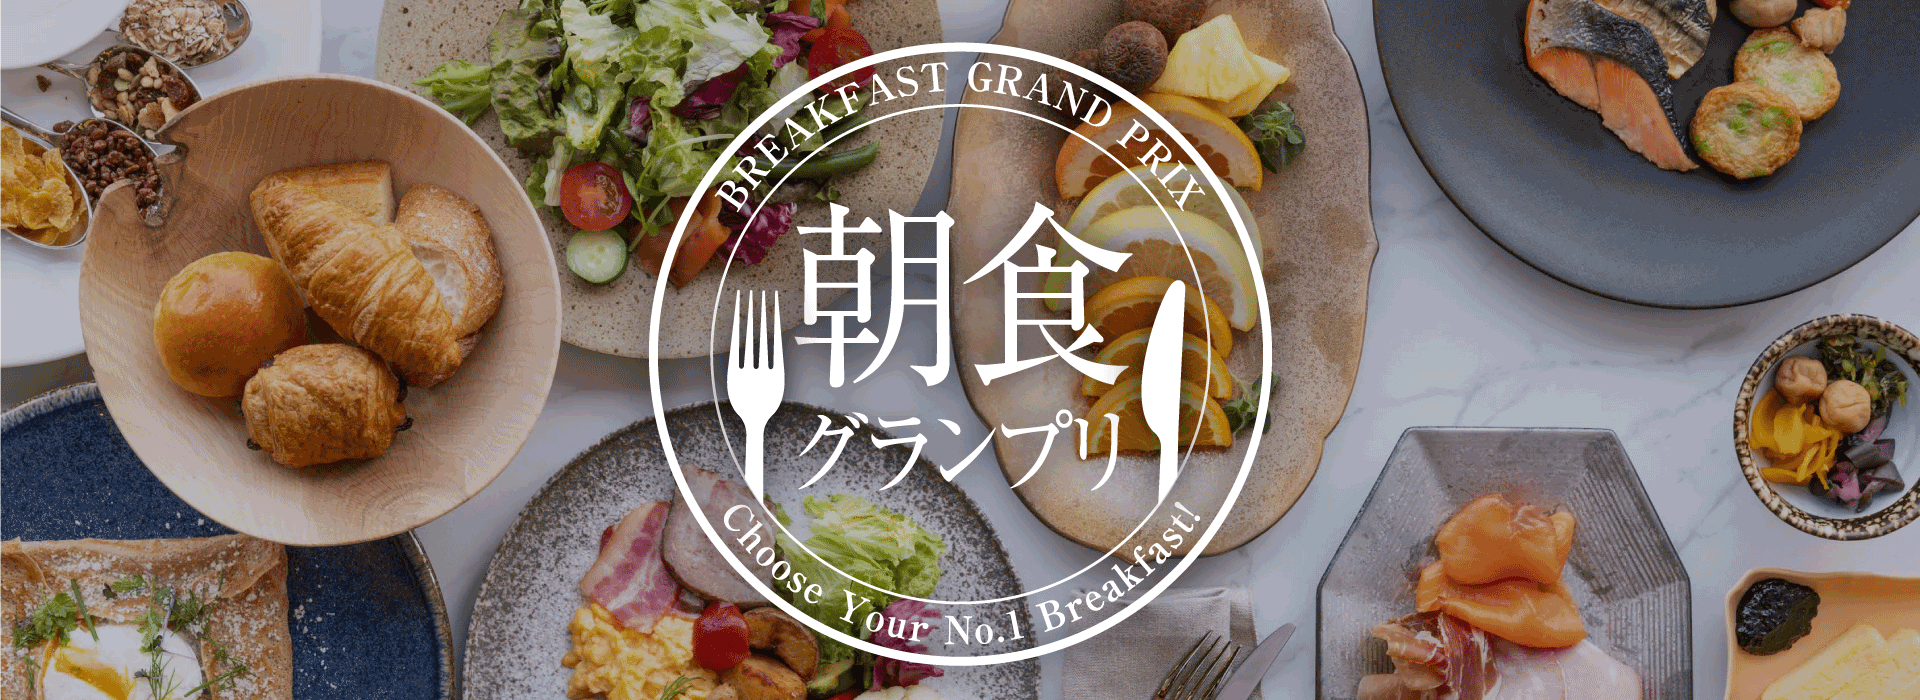 BREAKFAST GRAND PRIX 朝食グランプリ